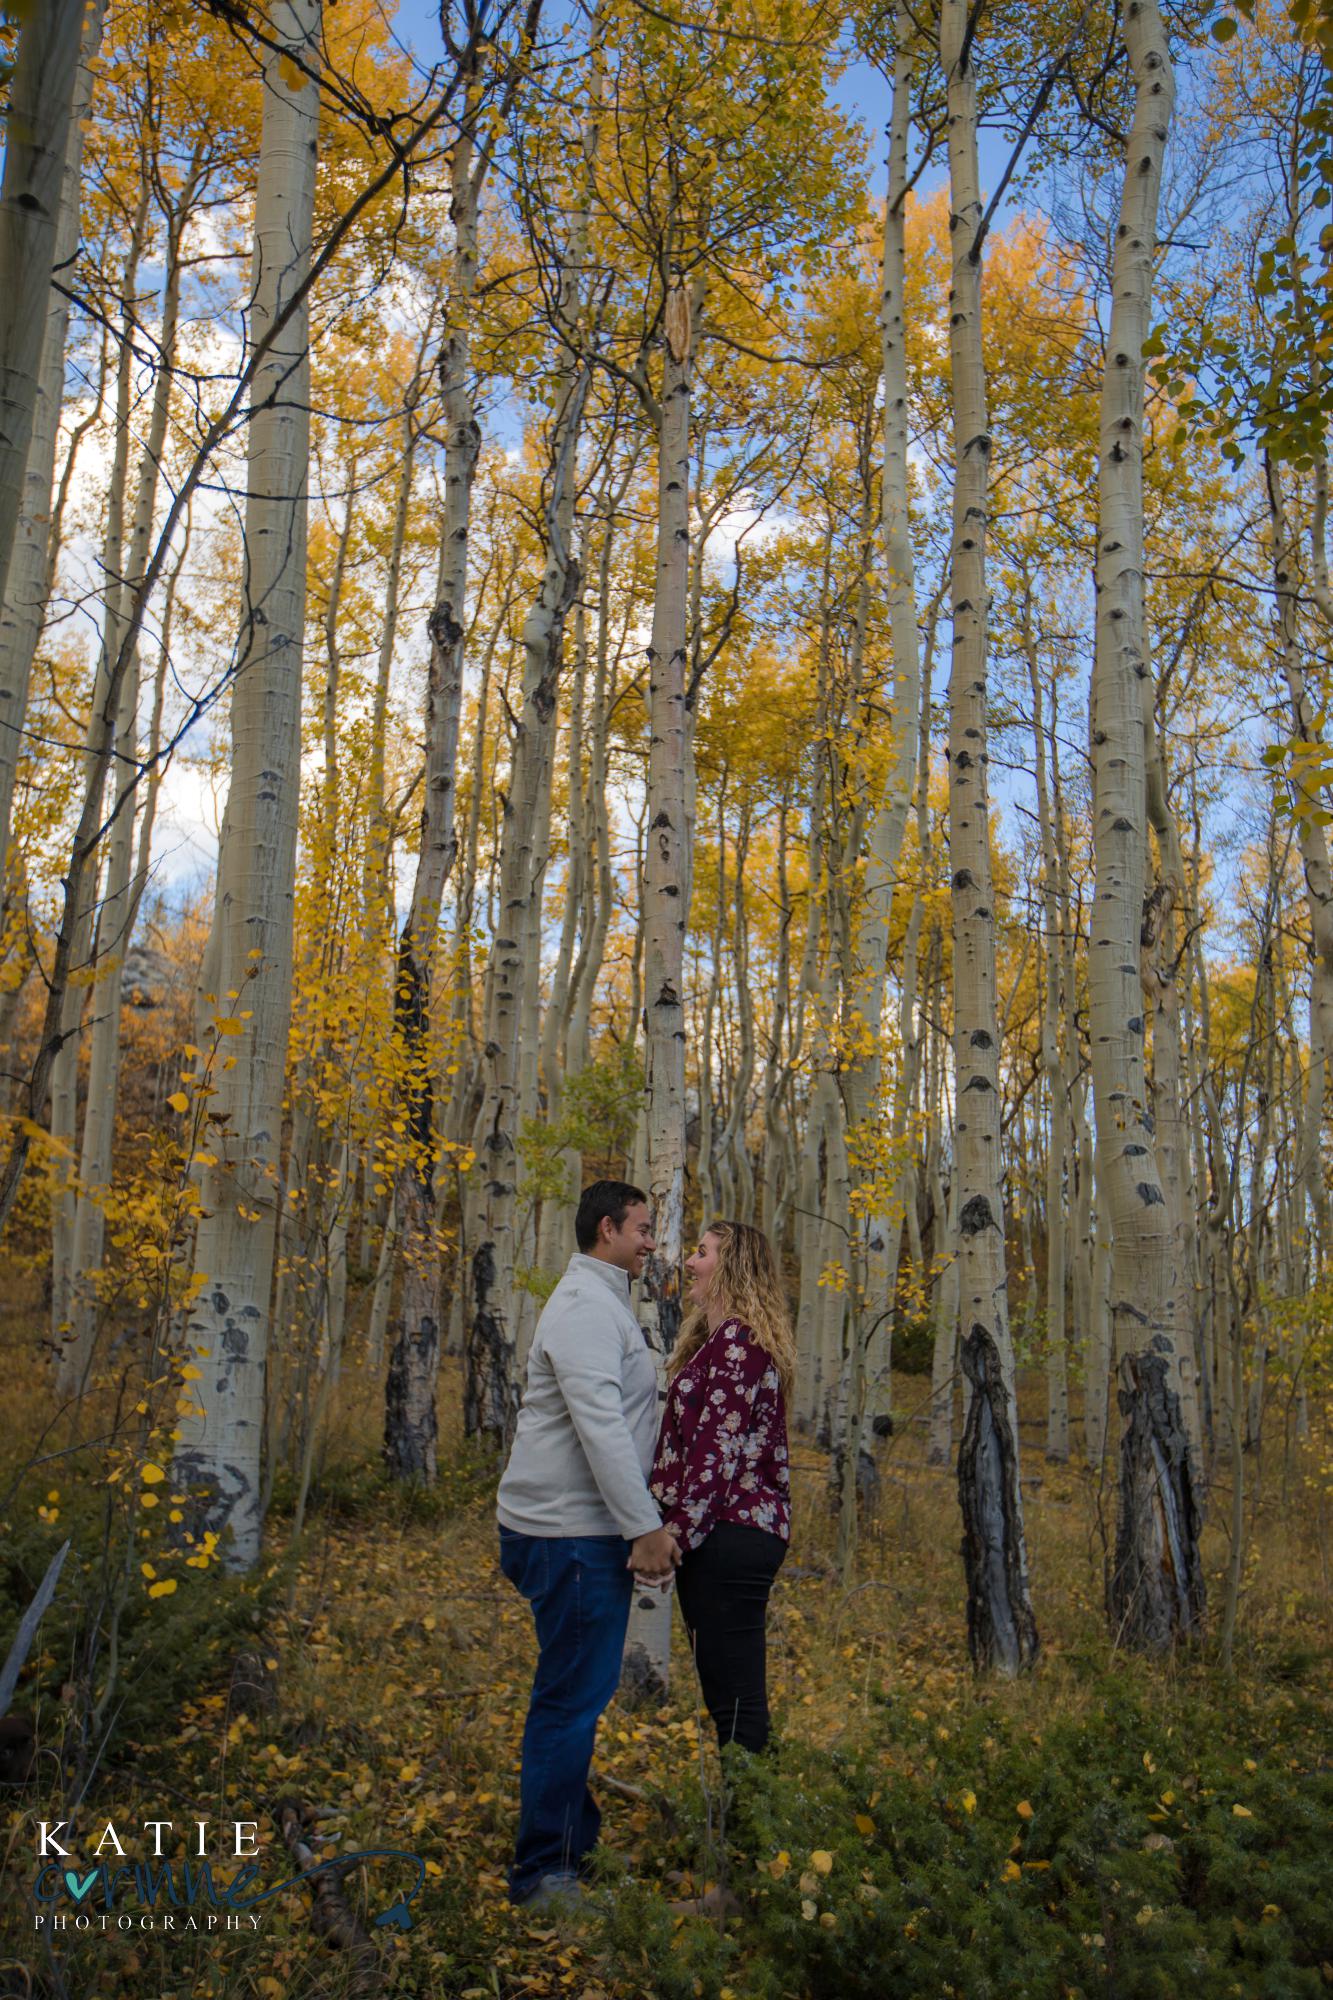 Colorado engaged couple among fall colors